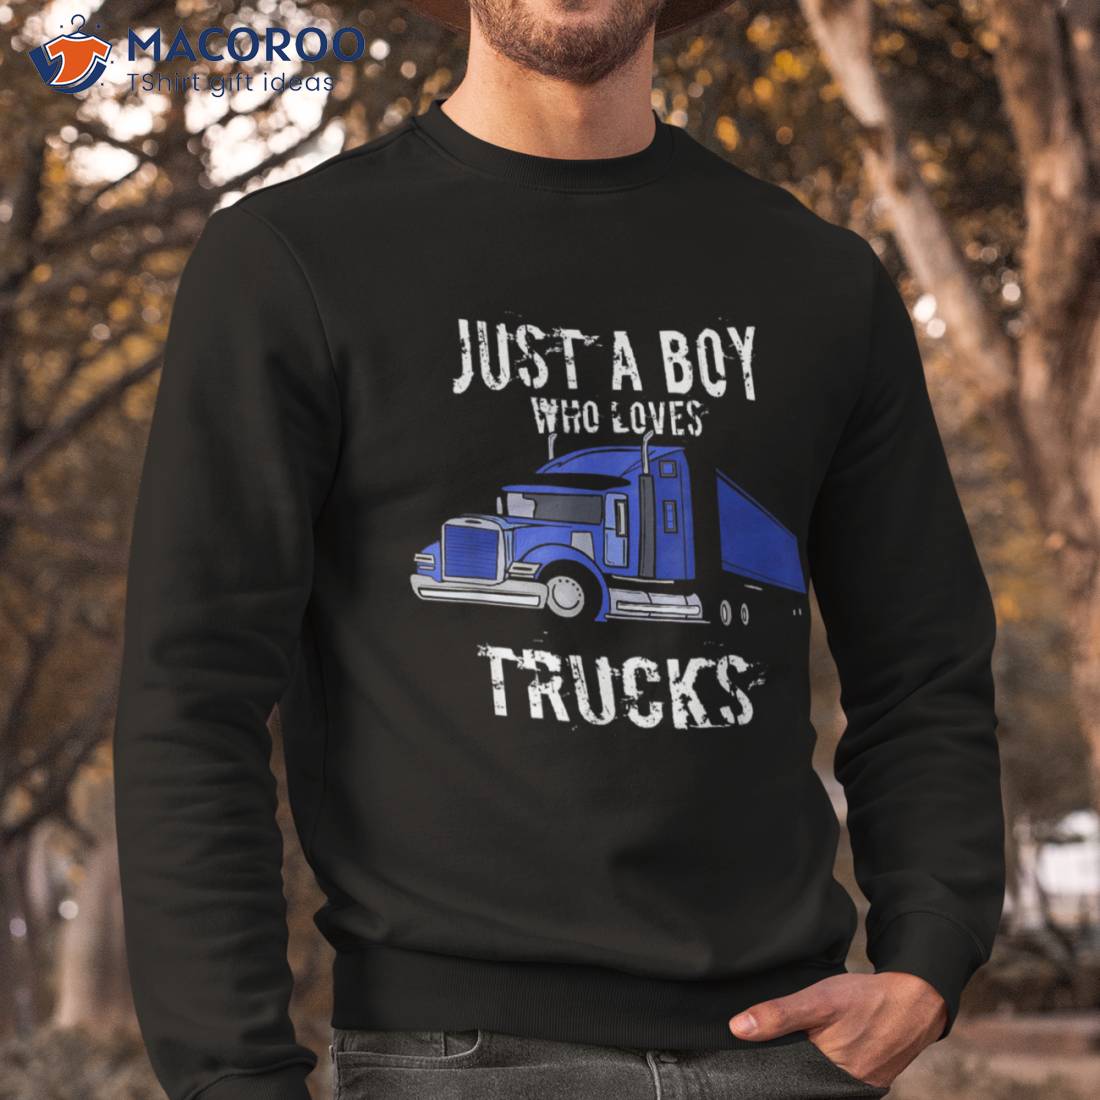 https://images.macoroo.com/wp-content/uploads/2023/04/kids-semi-truck-t-shirt-gift-just-a-boy-who-loves-trucks-sweatshirt.jpg